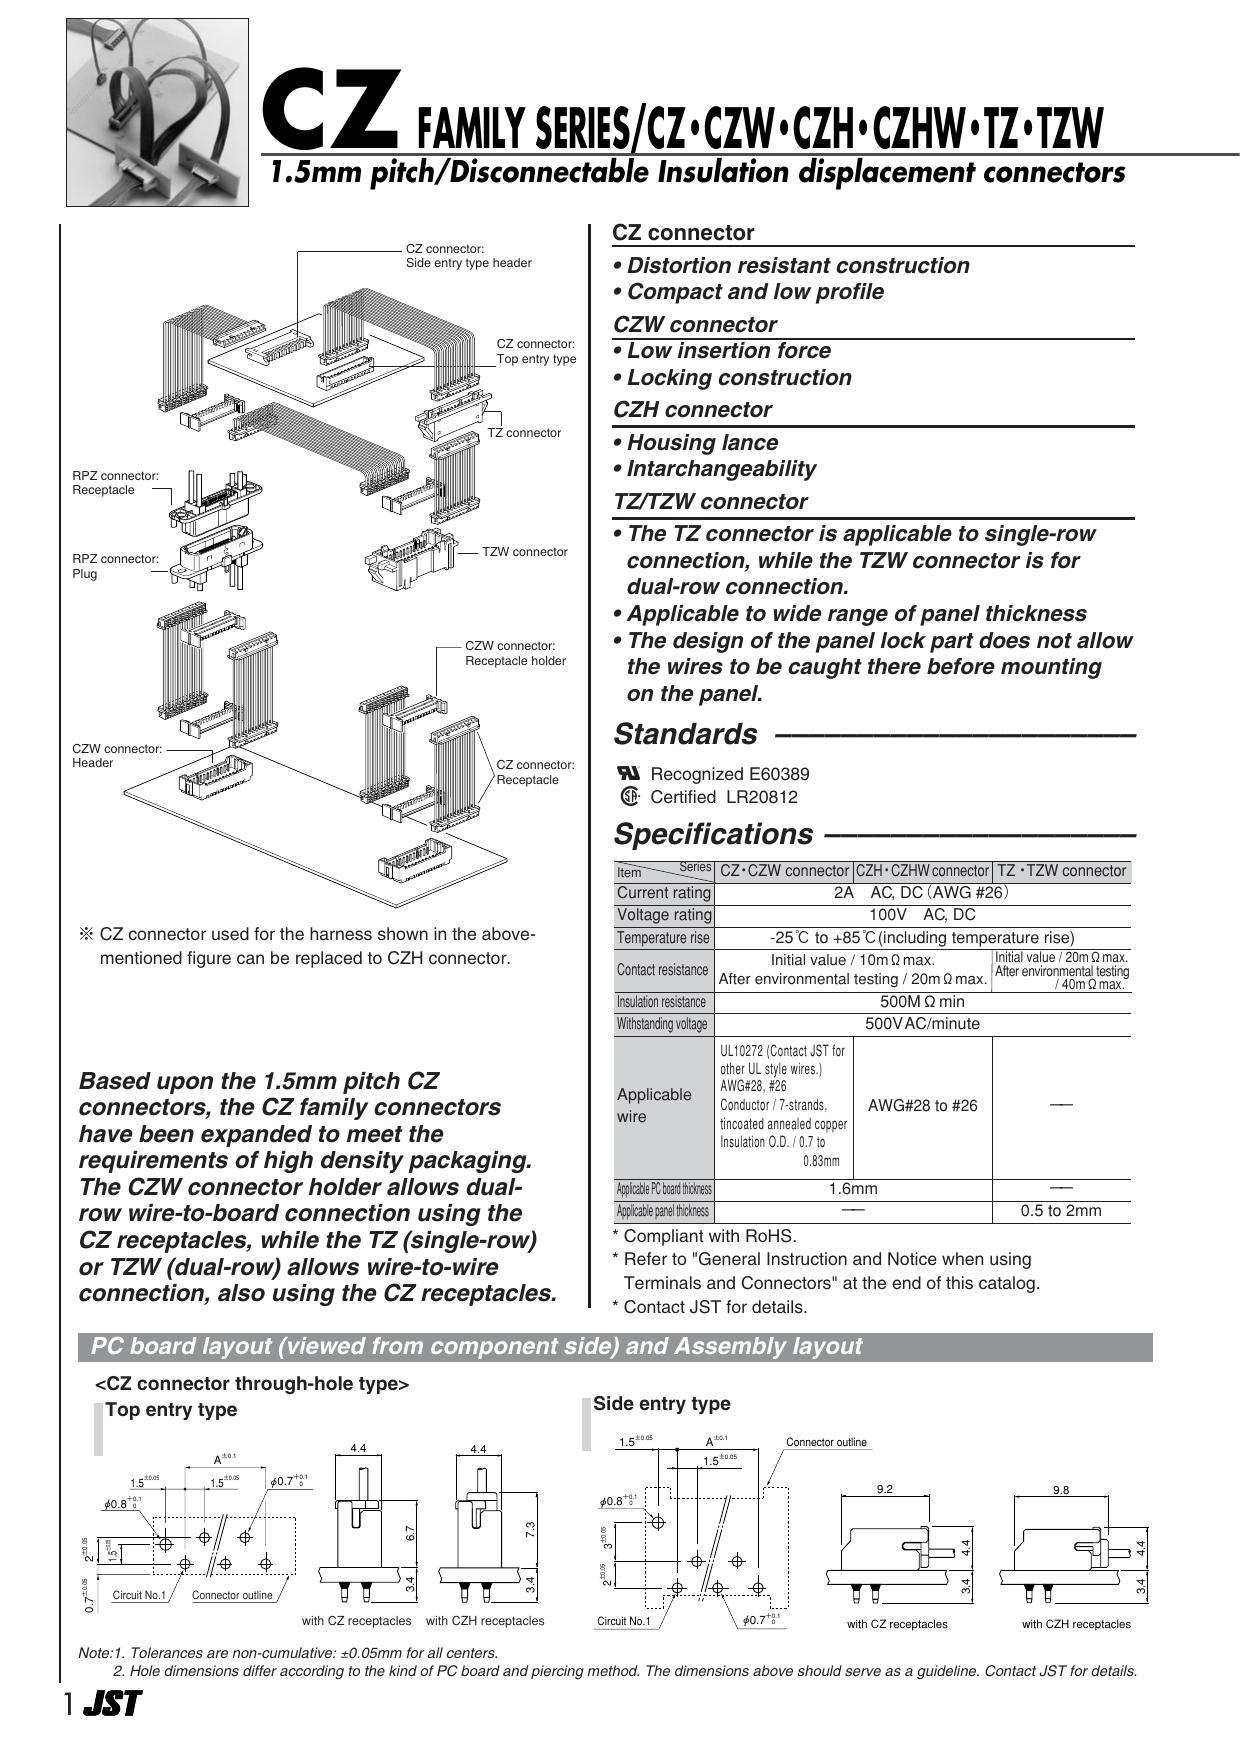 cz-family-series-connectors-datasheet.pdf